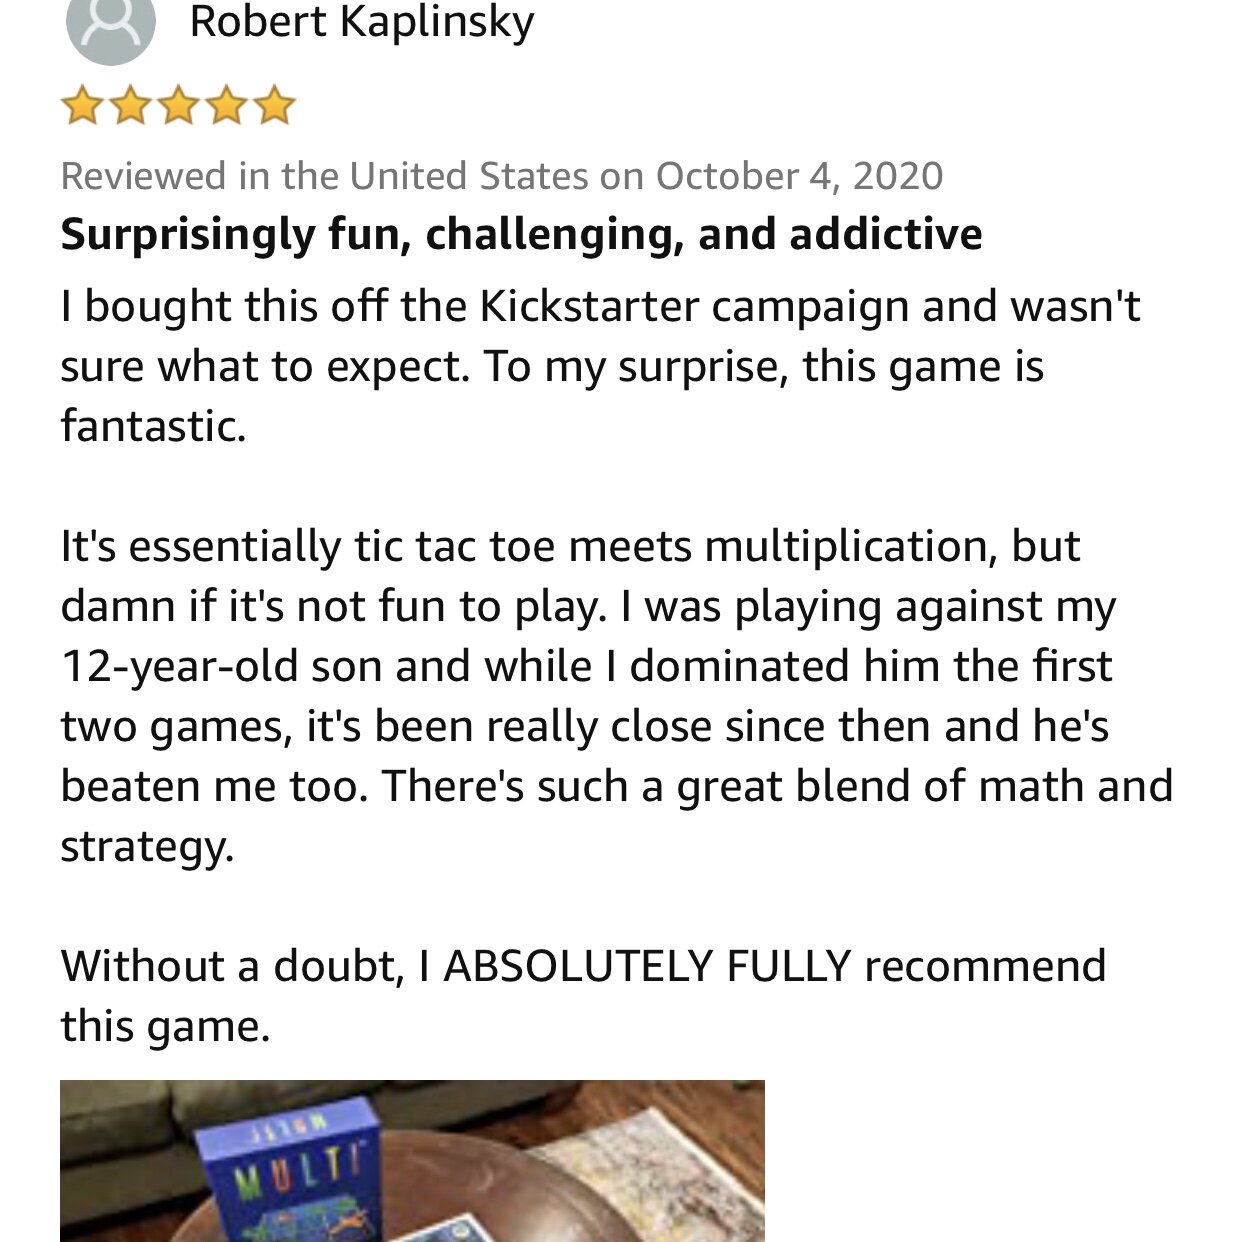 MULTI - Math Board Game - Fun For All Ages! by Joyful Mathematics —  Kickstarter